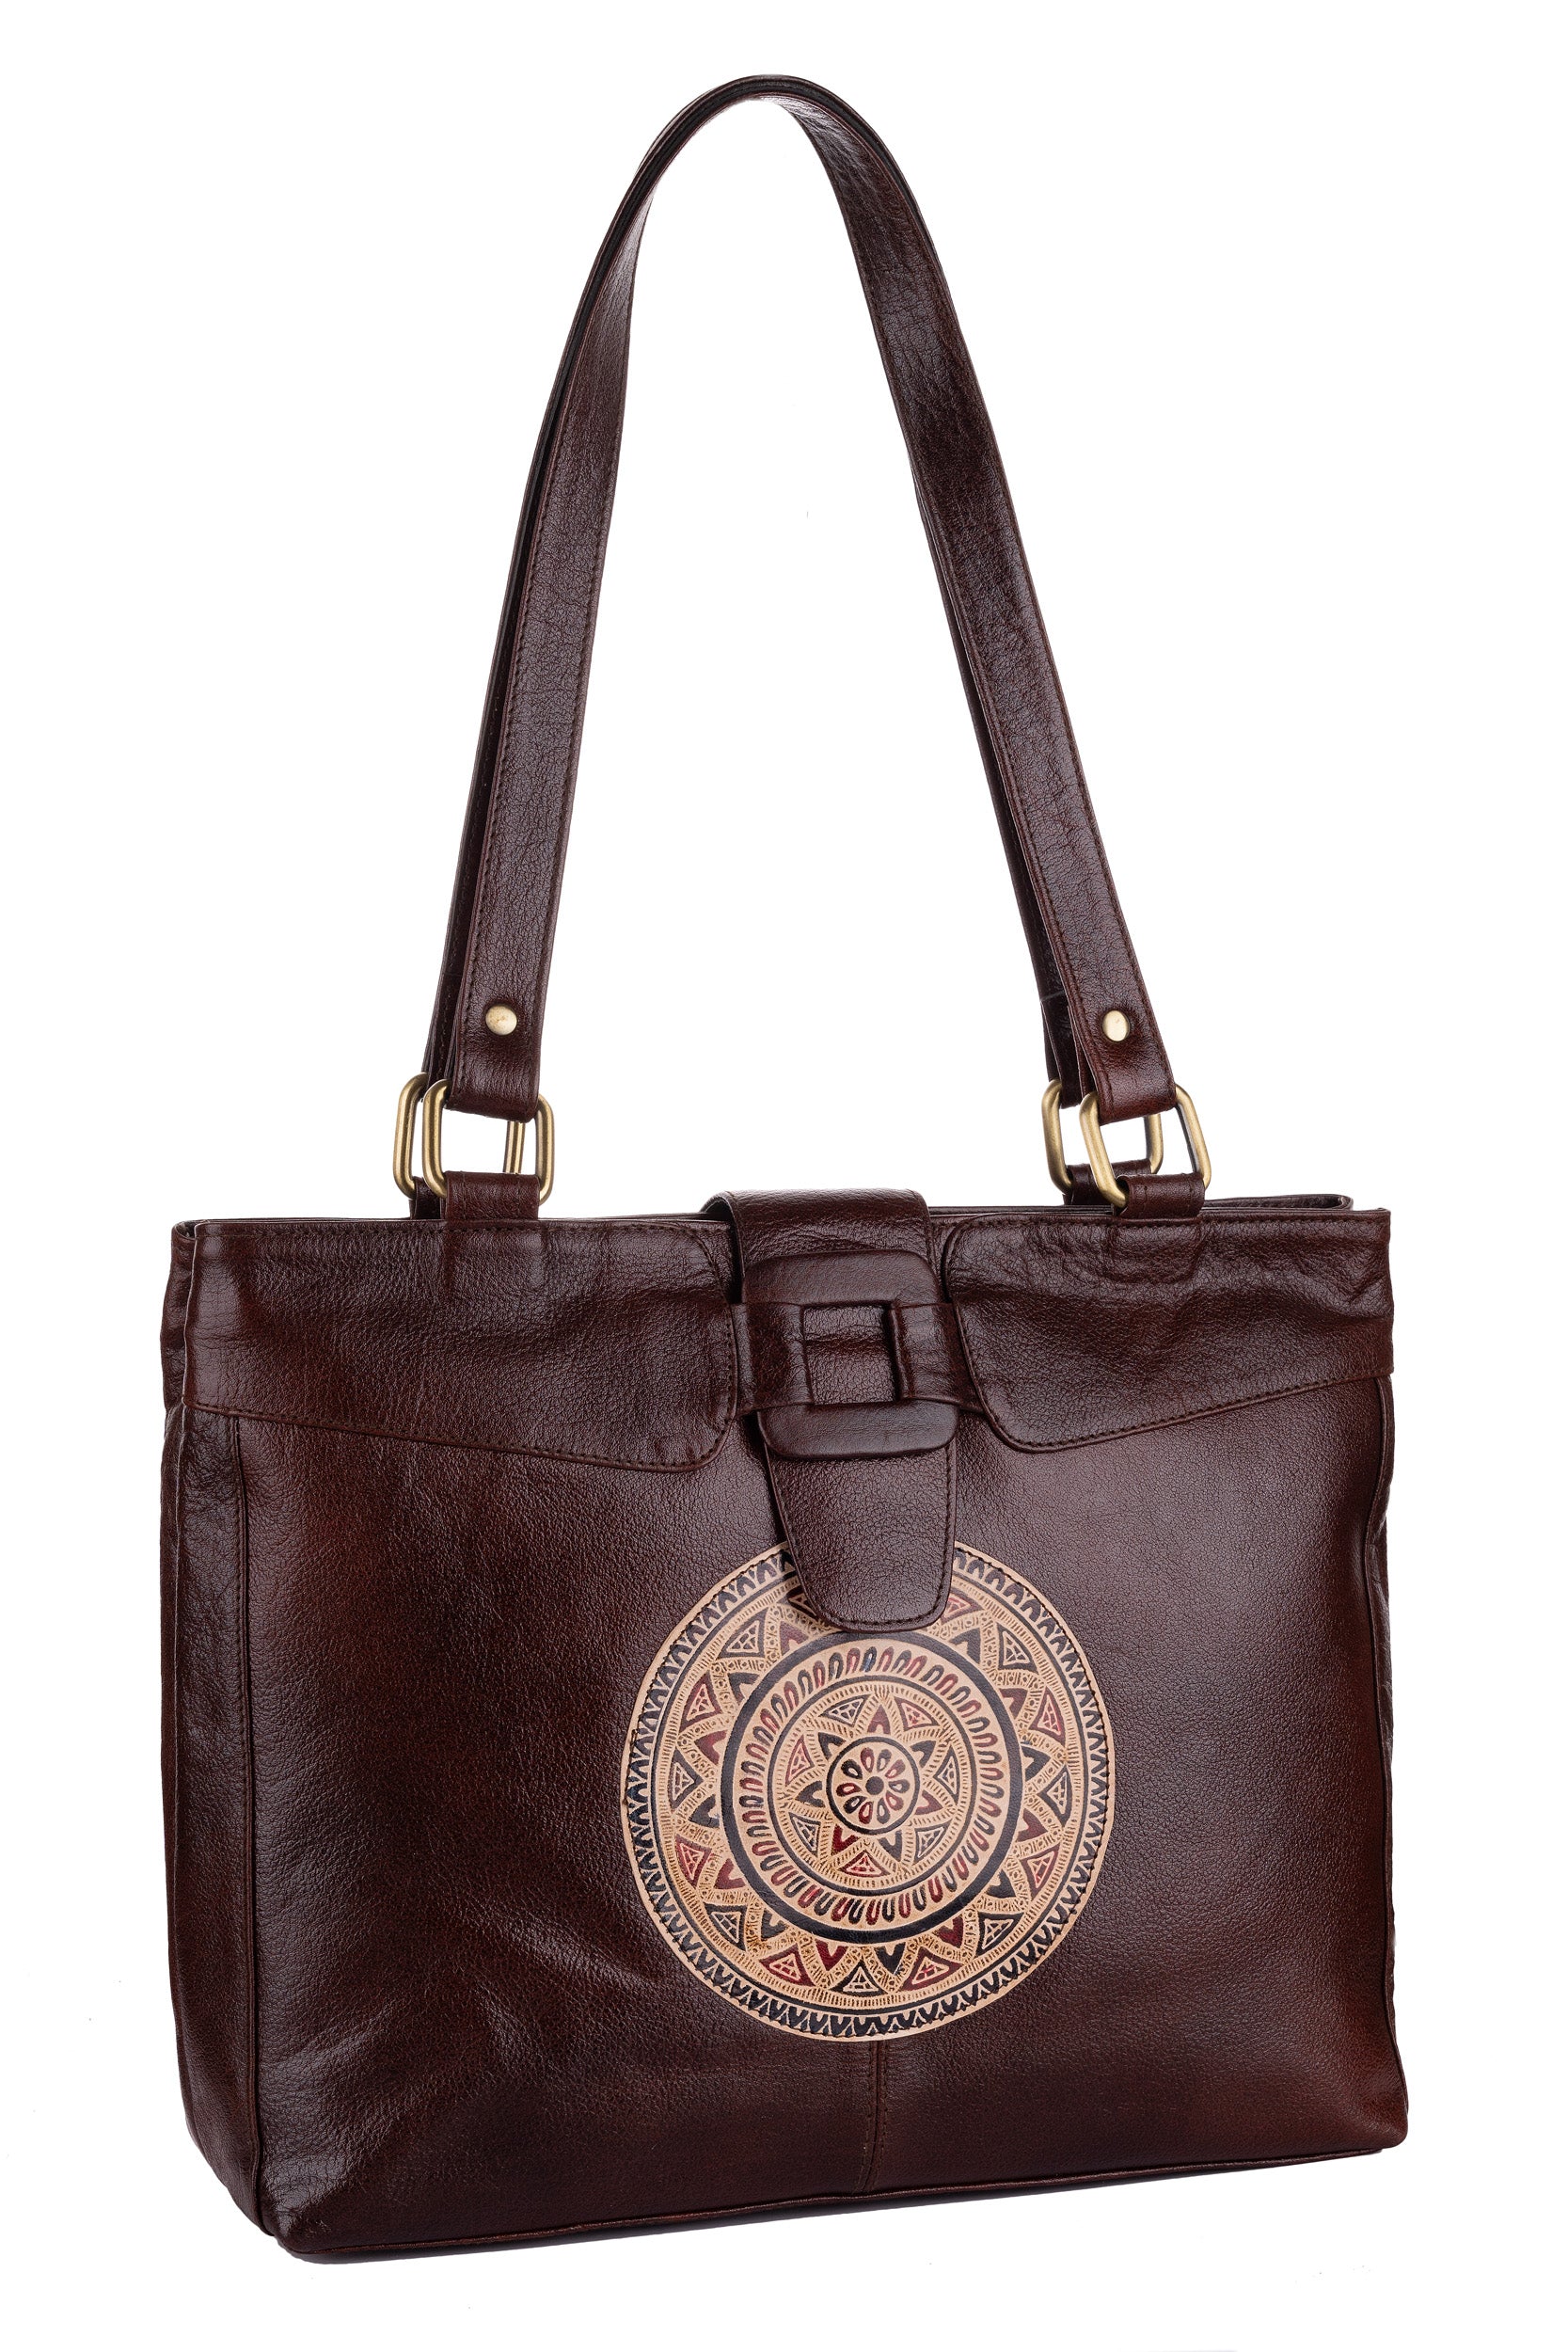 shantiniketan-leather-traditional-printed-brown-handbag-14-14-for-women-hb12